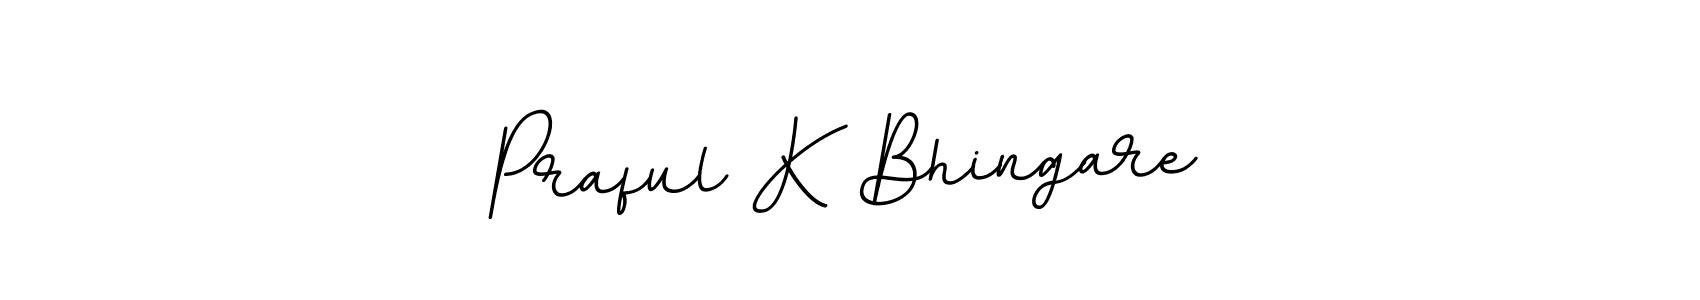 How to Draw Praful K Bhingare signature style? BallpointsItalic-DORy9 is a latest design signature styles for name Praful K Bhingare. Praful K Bhingare signature style 11 images and pictures png